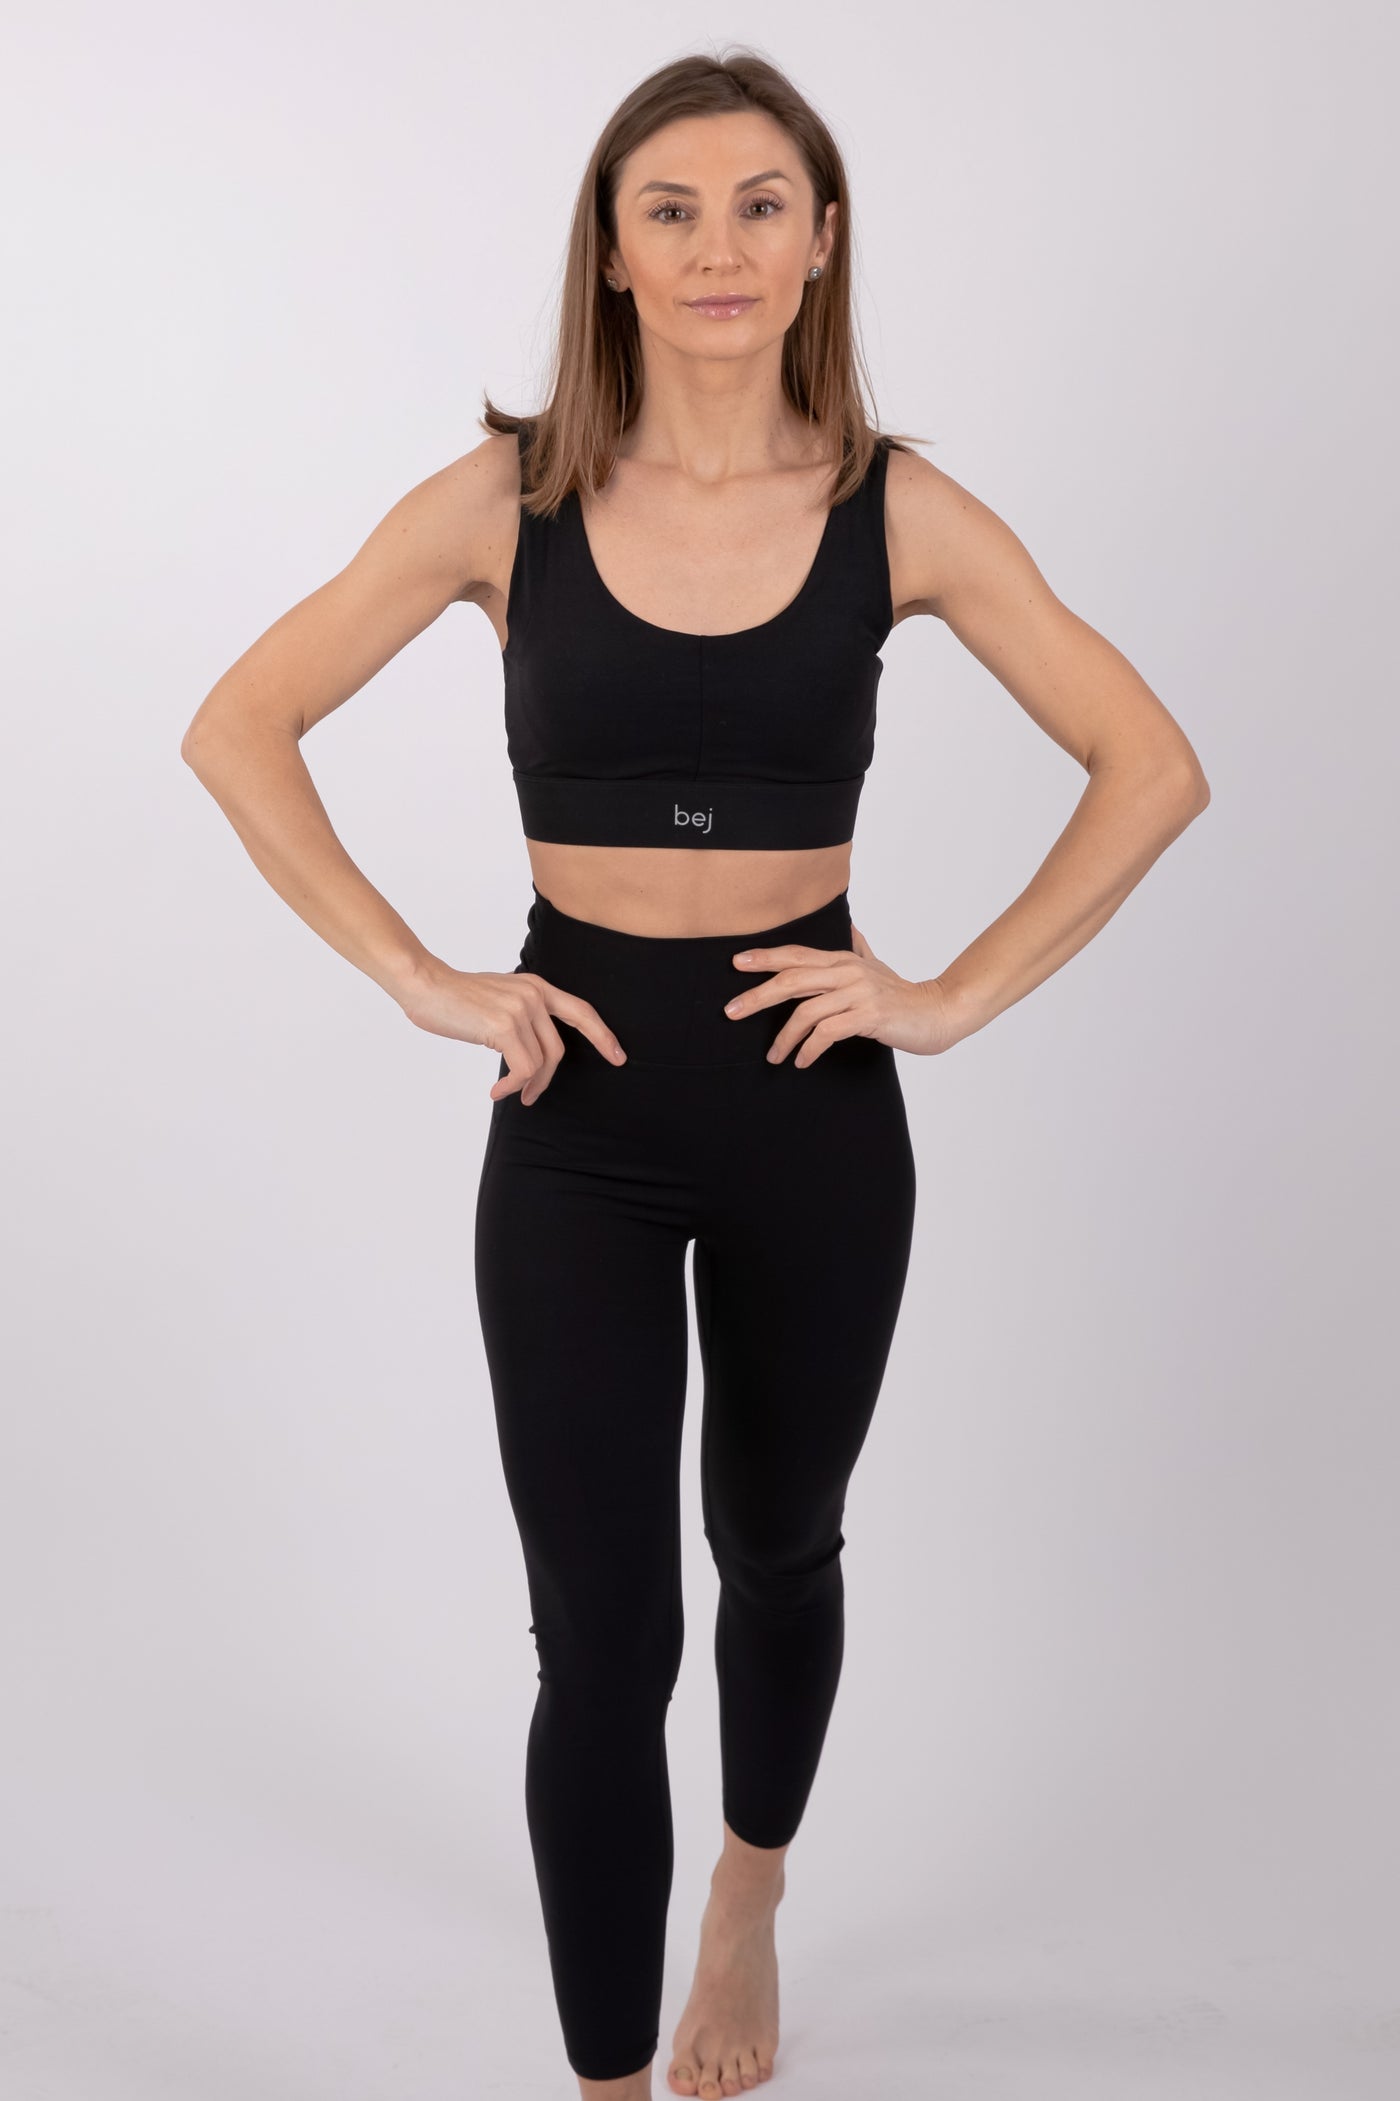 Athlete Black Legging - Shop women's workout apparel online | Leggings, hoodies, Top & bras | bejactive